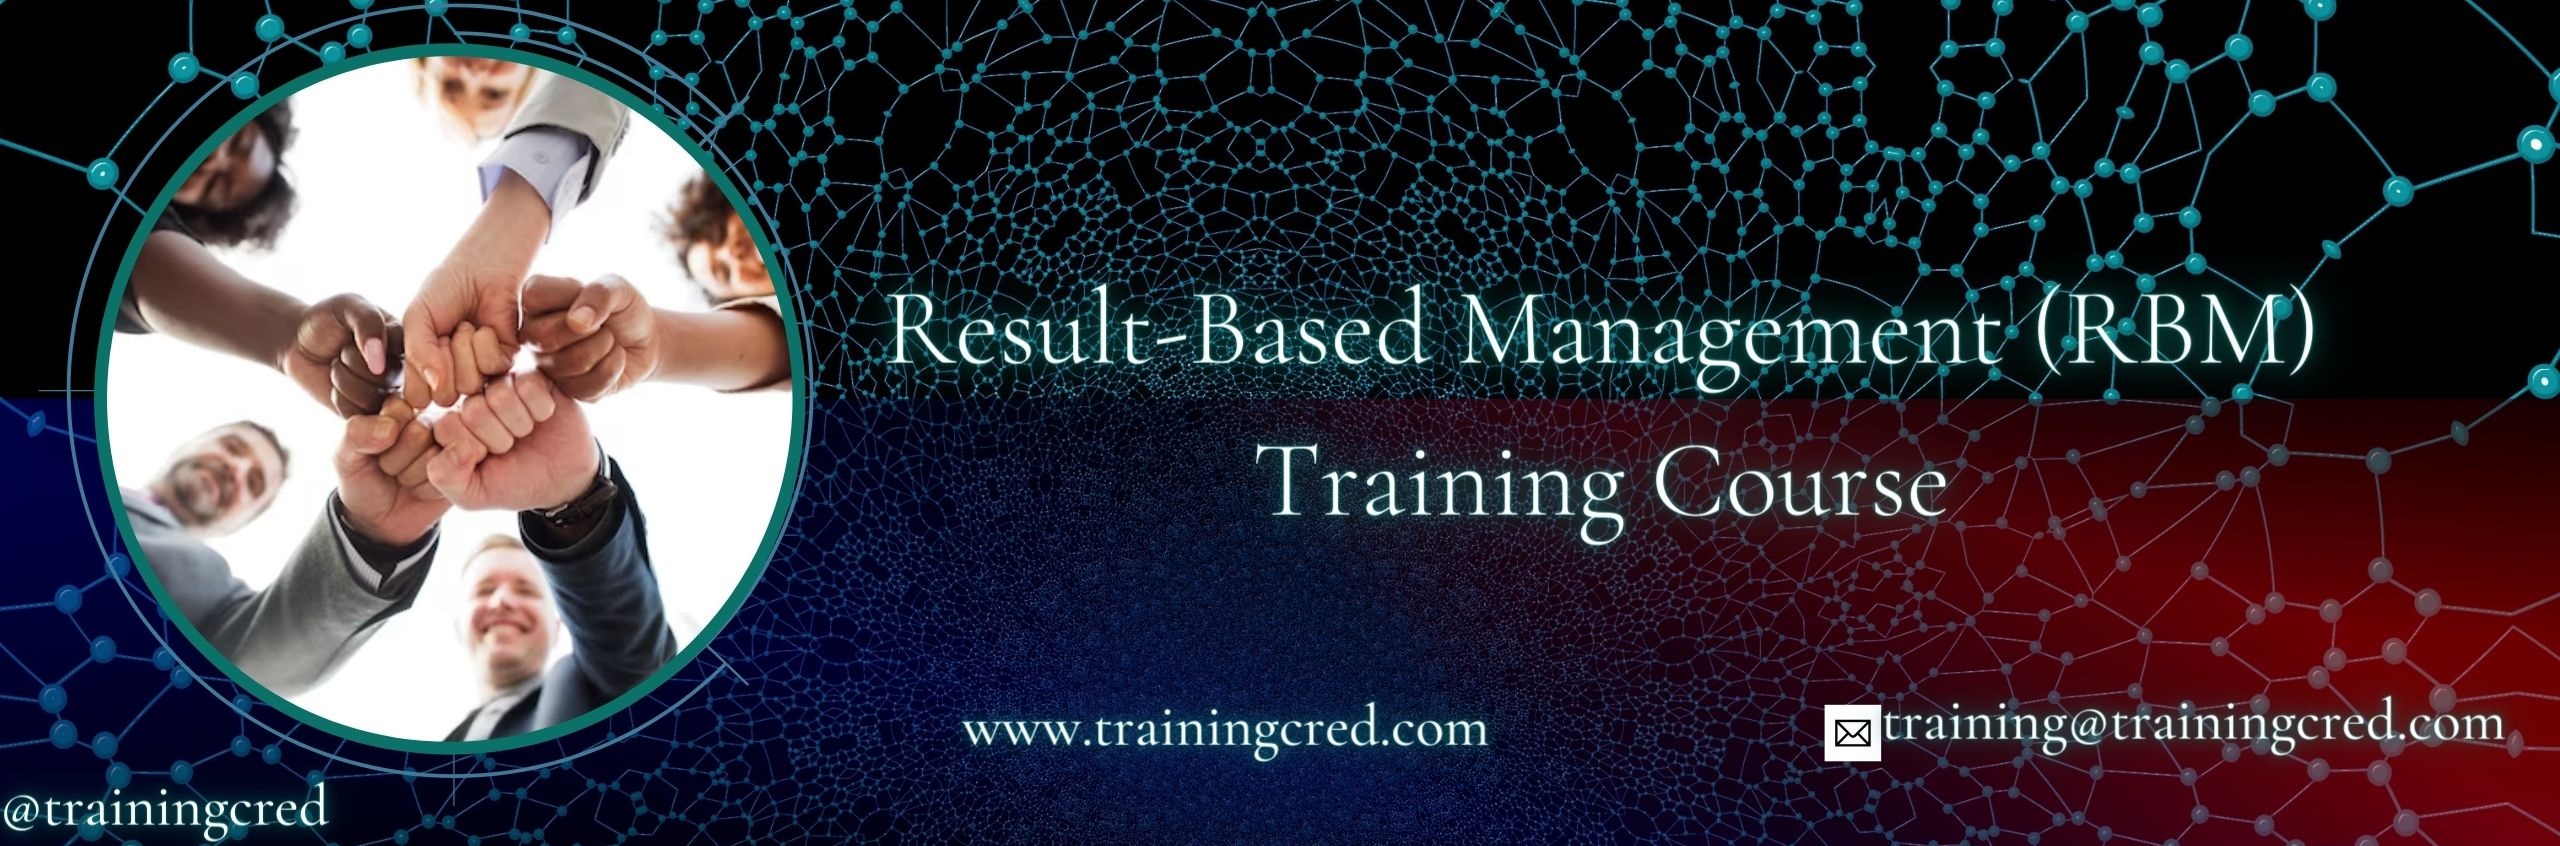 Result-Based Management (RBM) Training